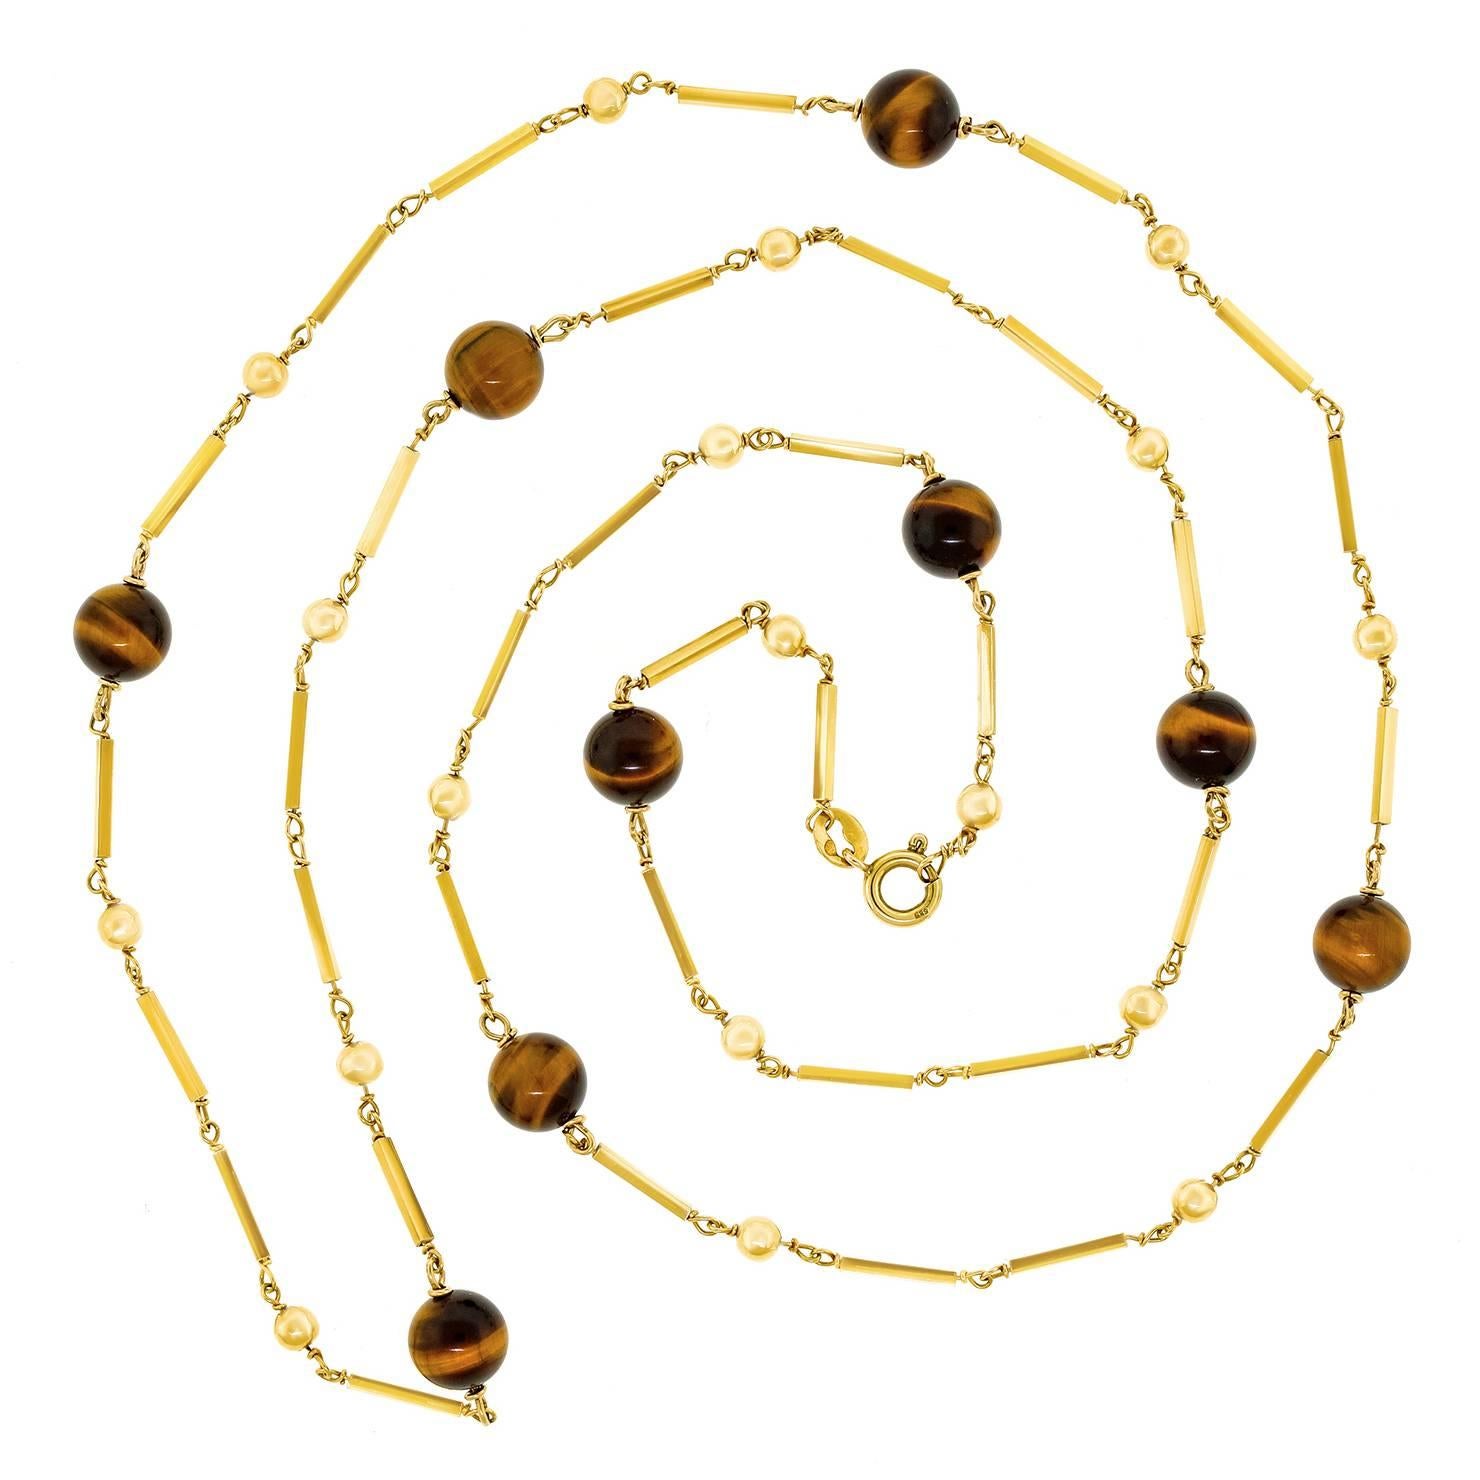 1960s Italian Design Tiger's Eye Gold Necklace